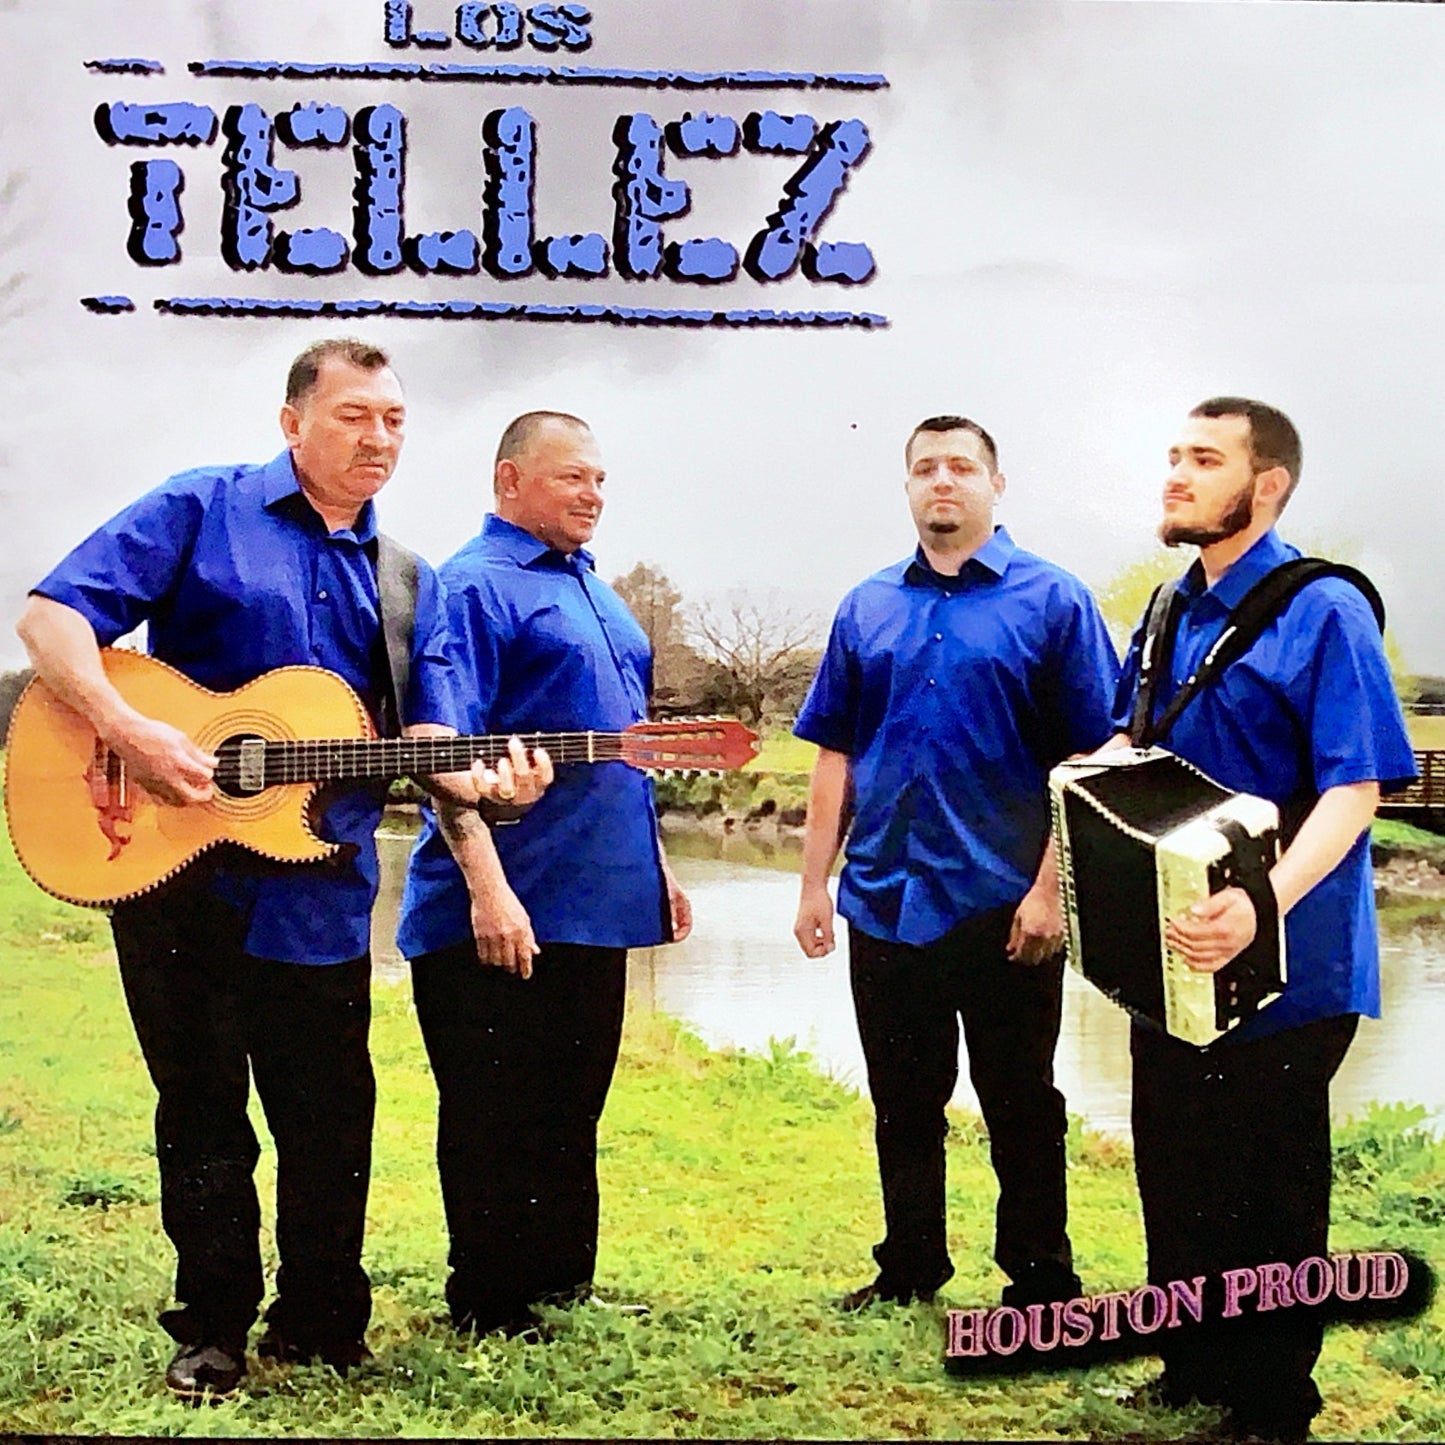 Los Tellez - Houston Proud (CD)